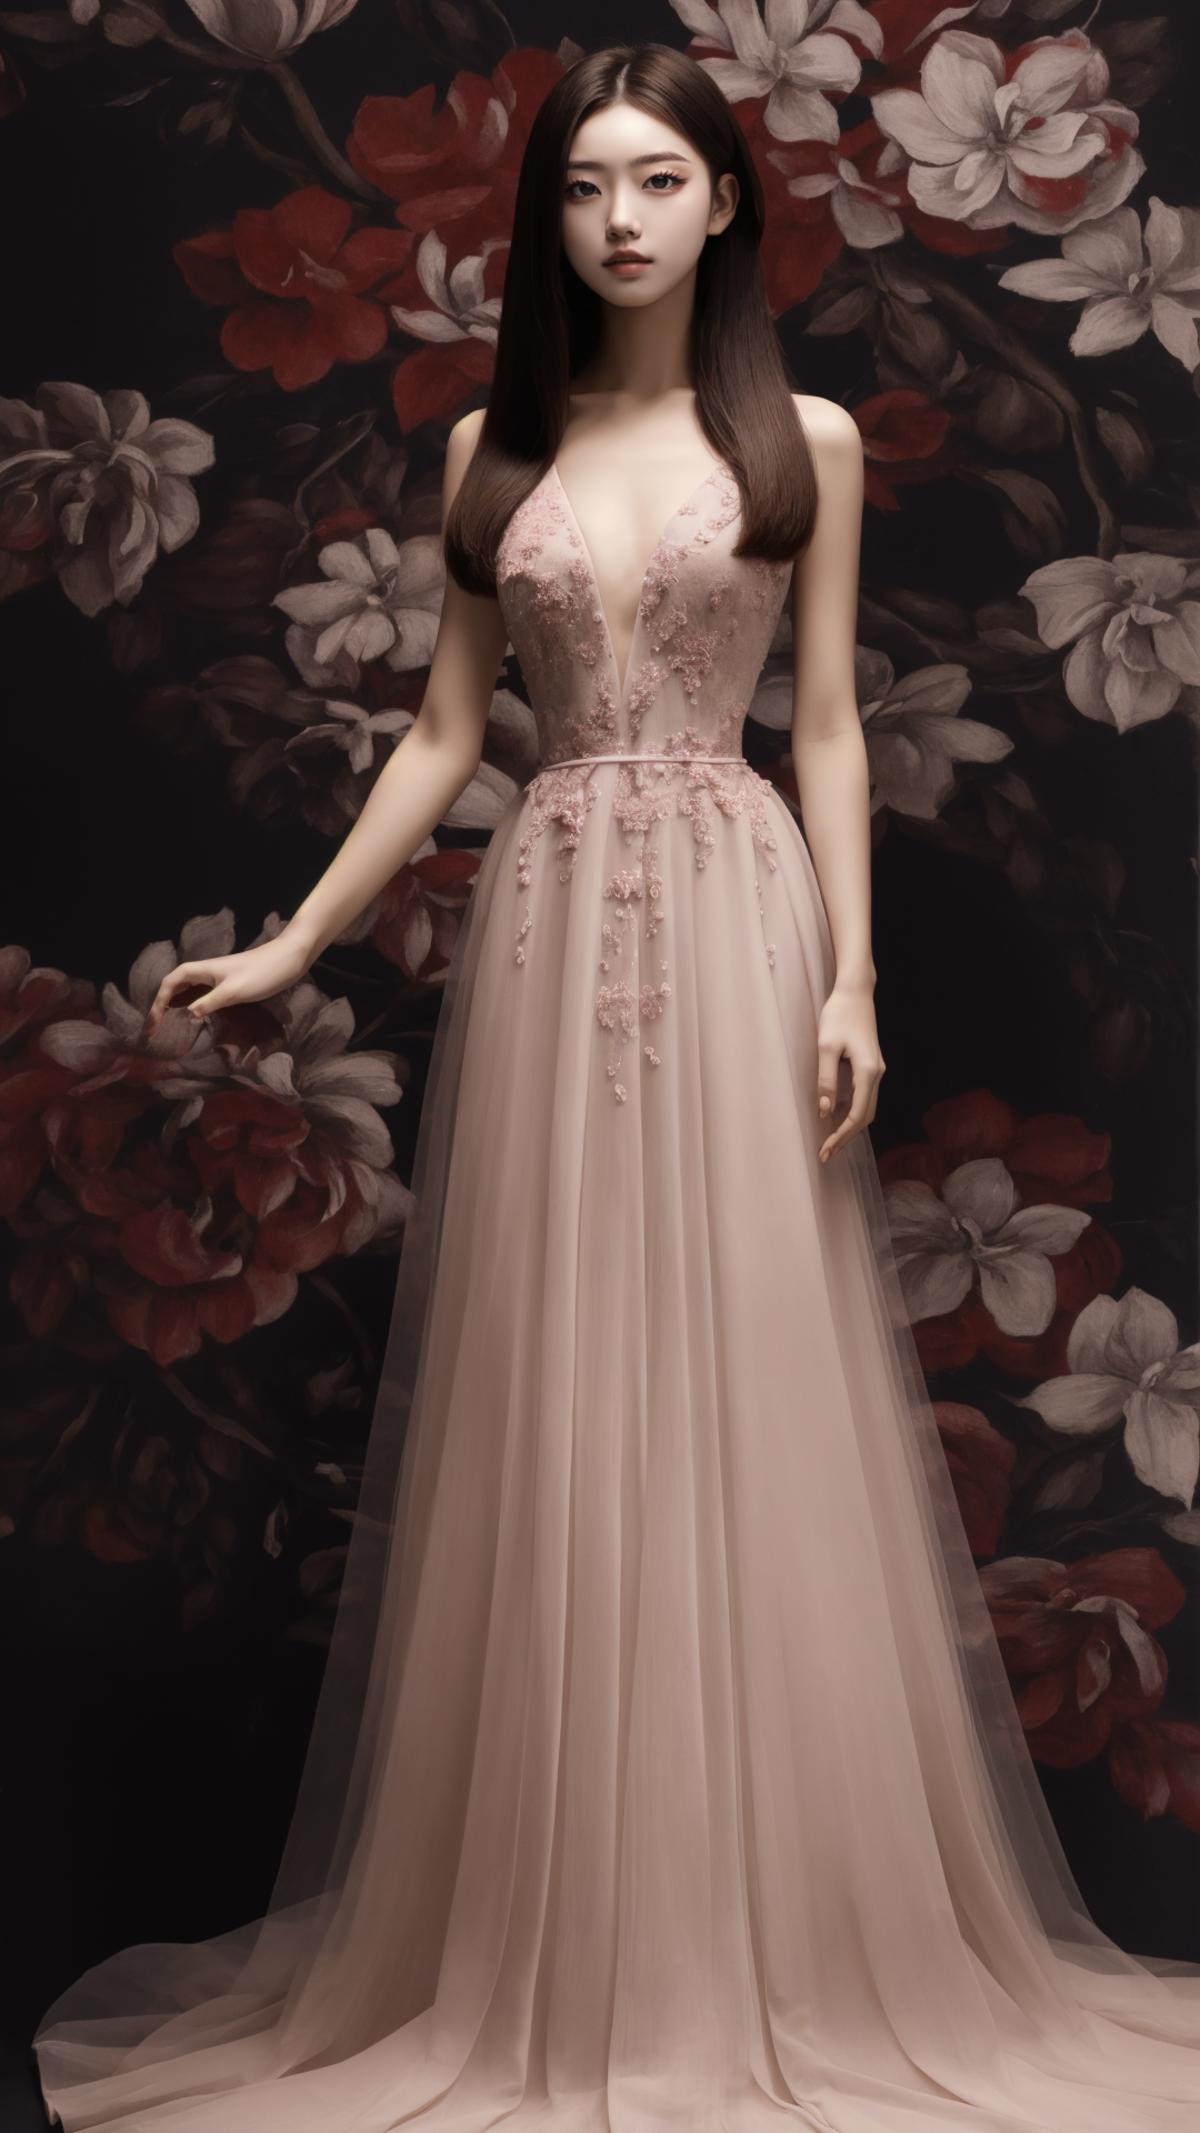 Fairy Wedding Dress 仙女婚纱裙 image by XiuAI